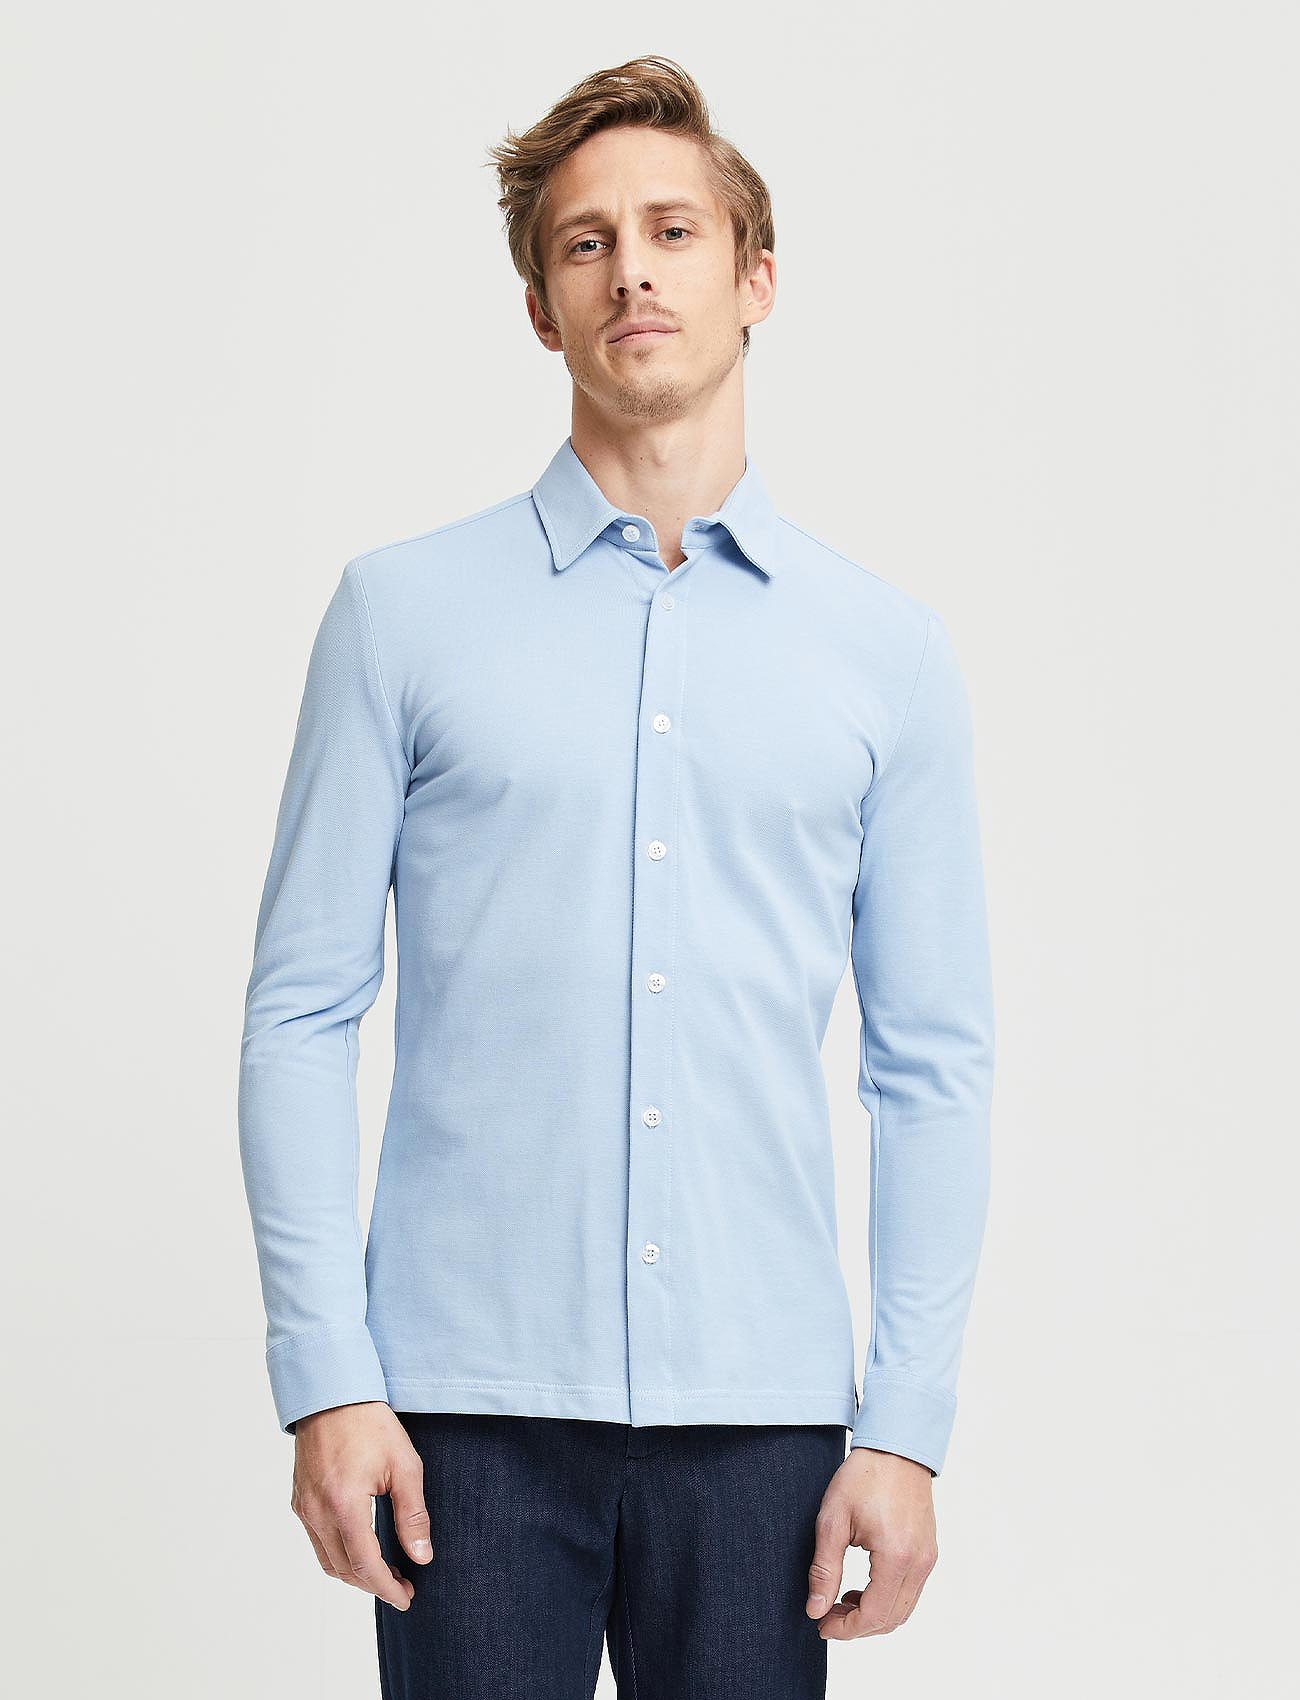 FRENN - Hemmo Organic Cotton Jersey Shirt - basic-hemden - sky blue - 0